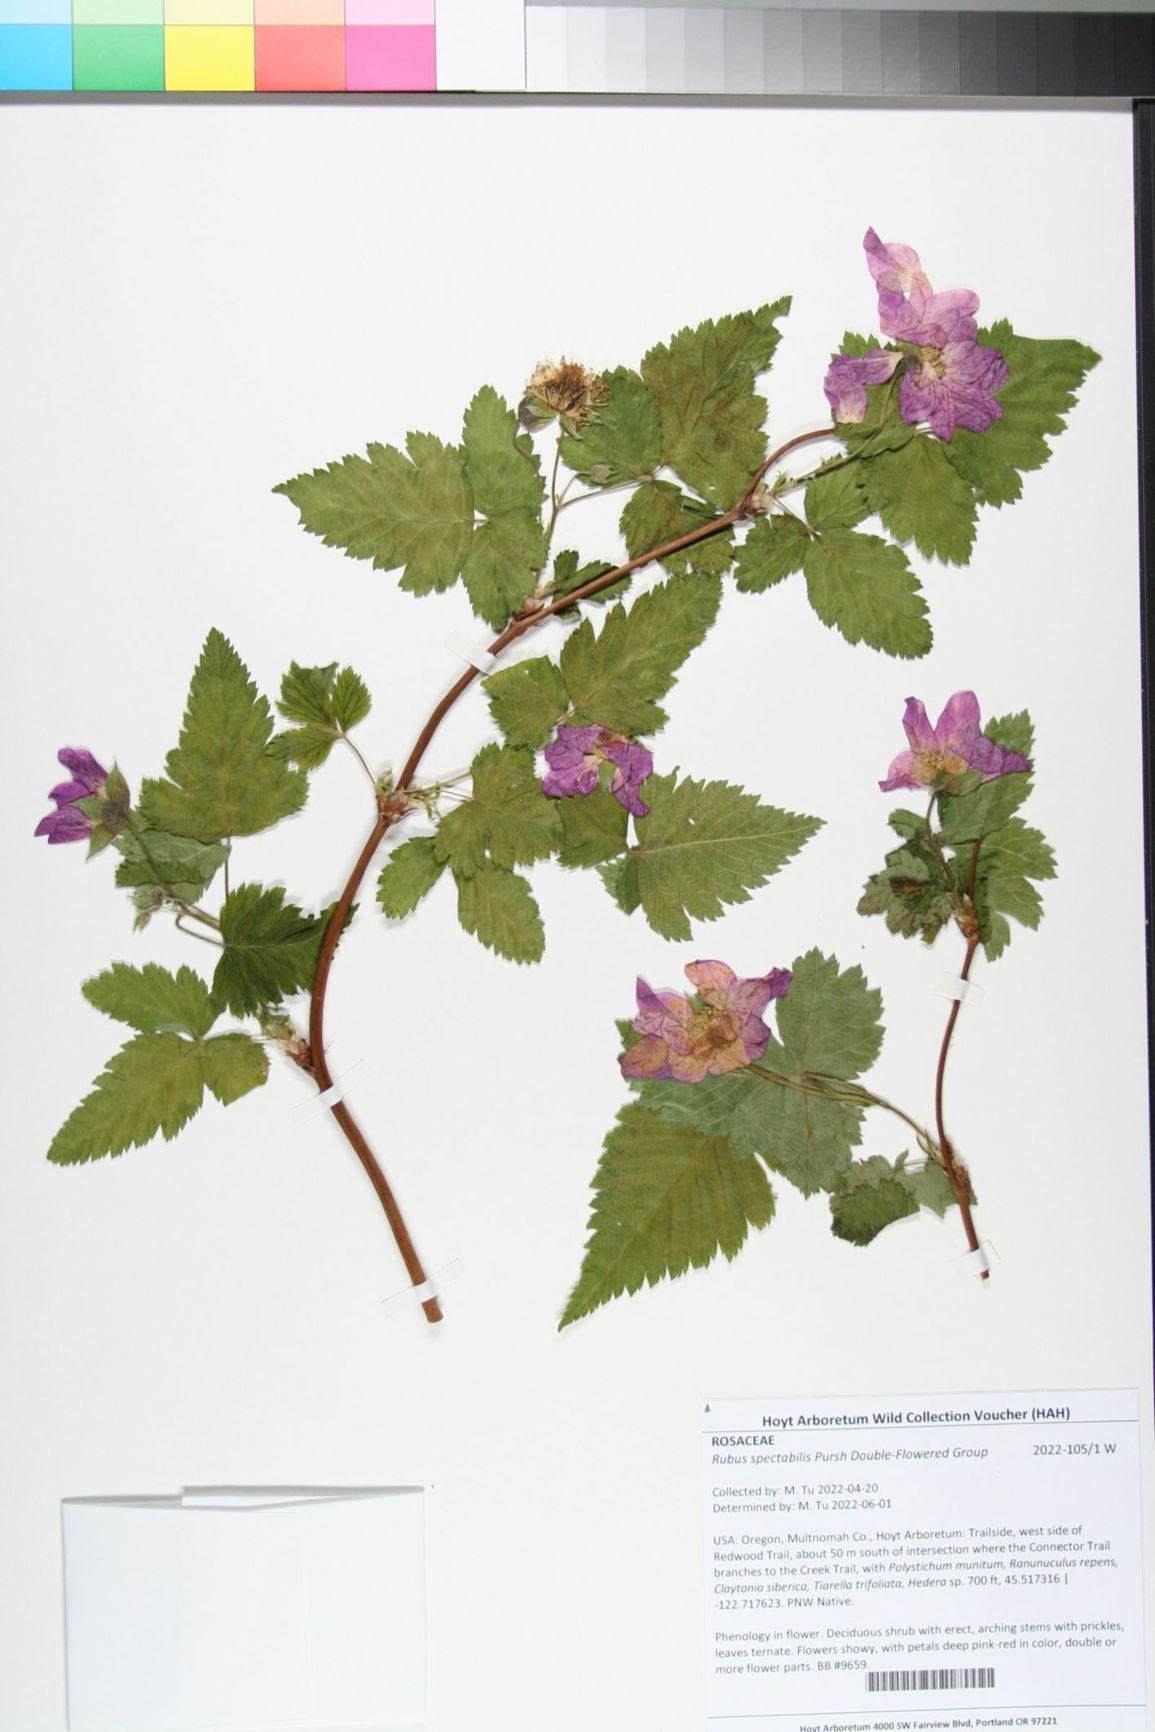 Rubus spectabilis Double-Flowered Group